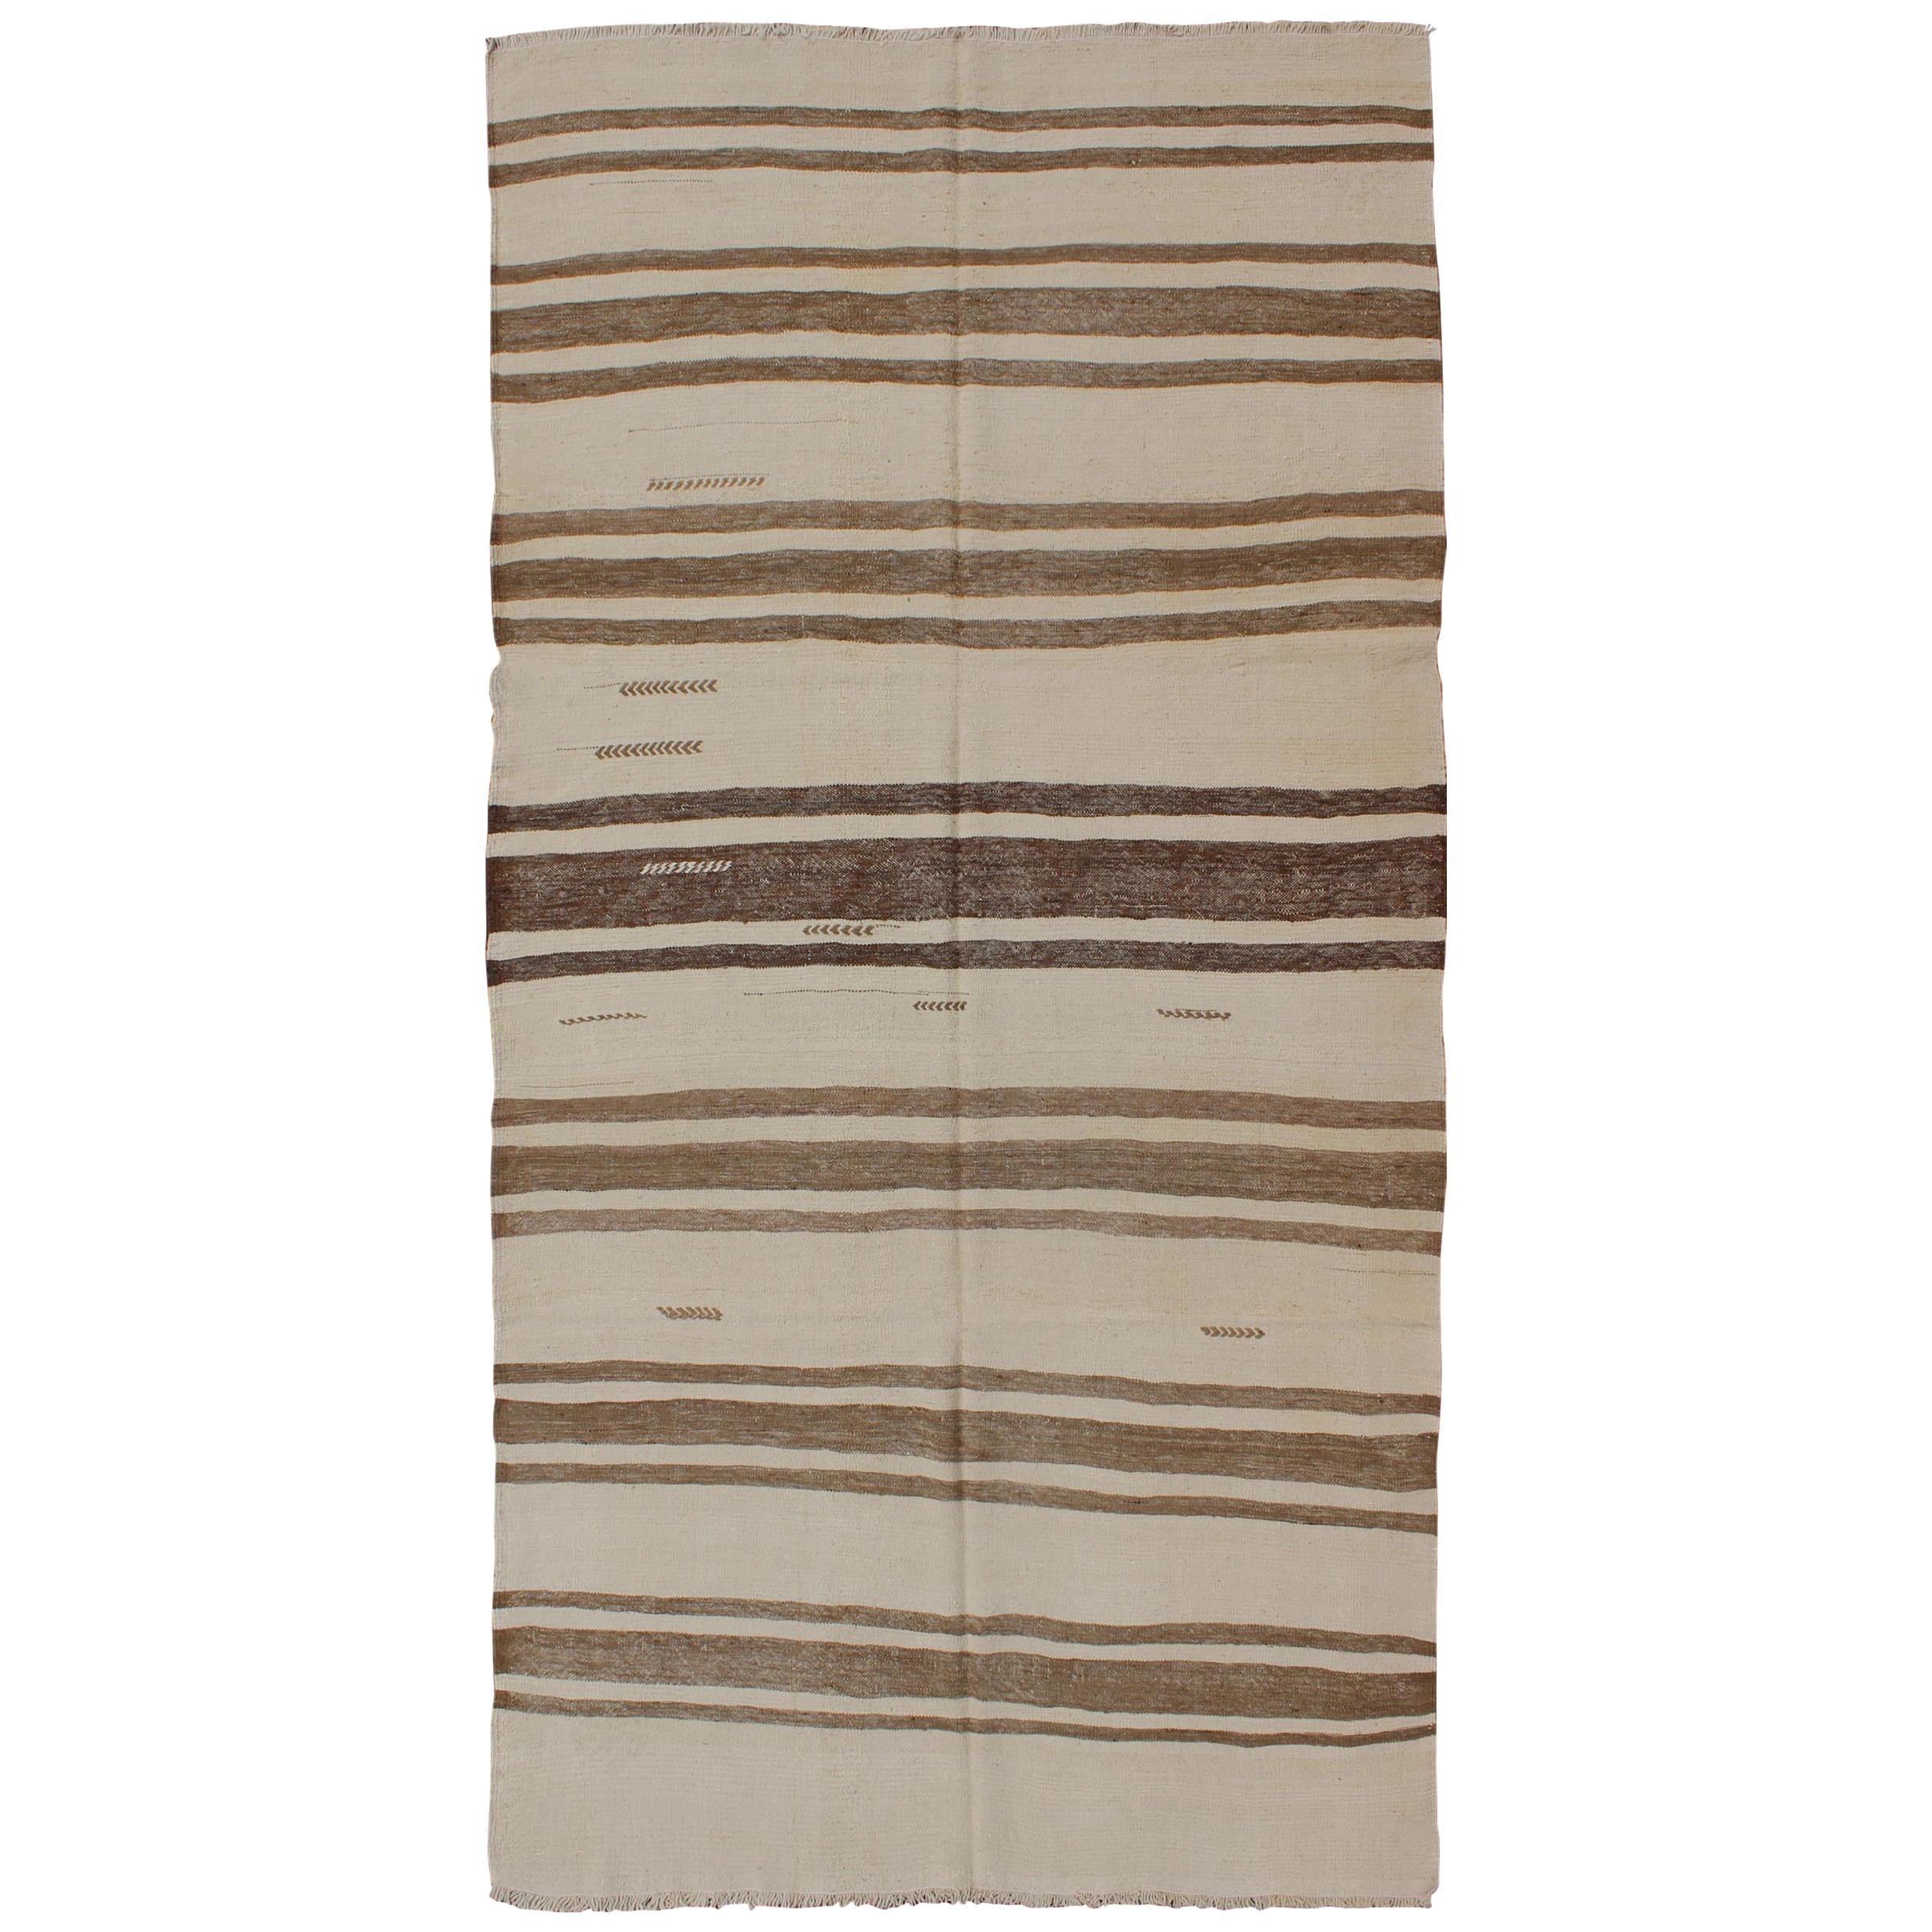 Turkish Vintage Kilim Flat-Weave Rug in Brown and Cream with Stripe Design